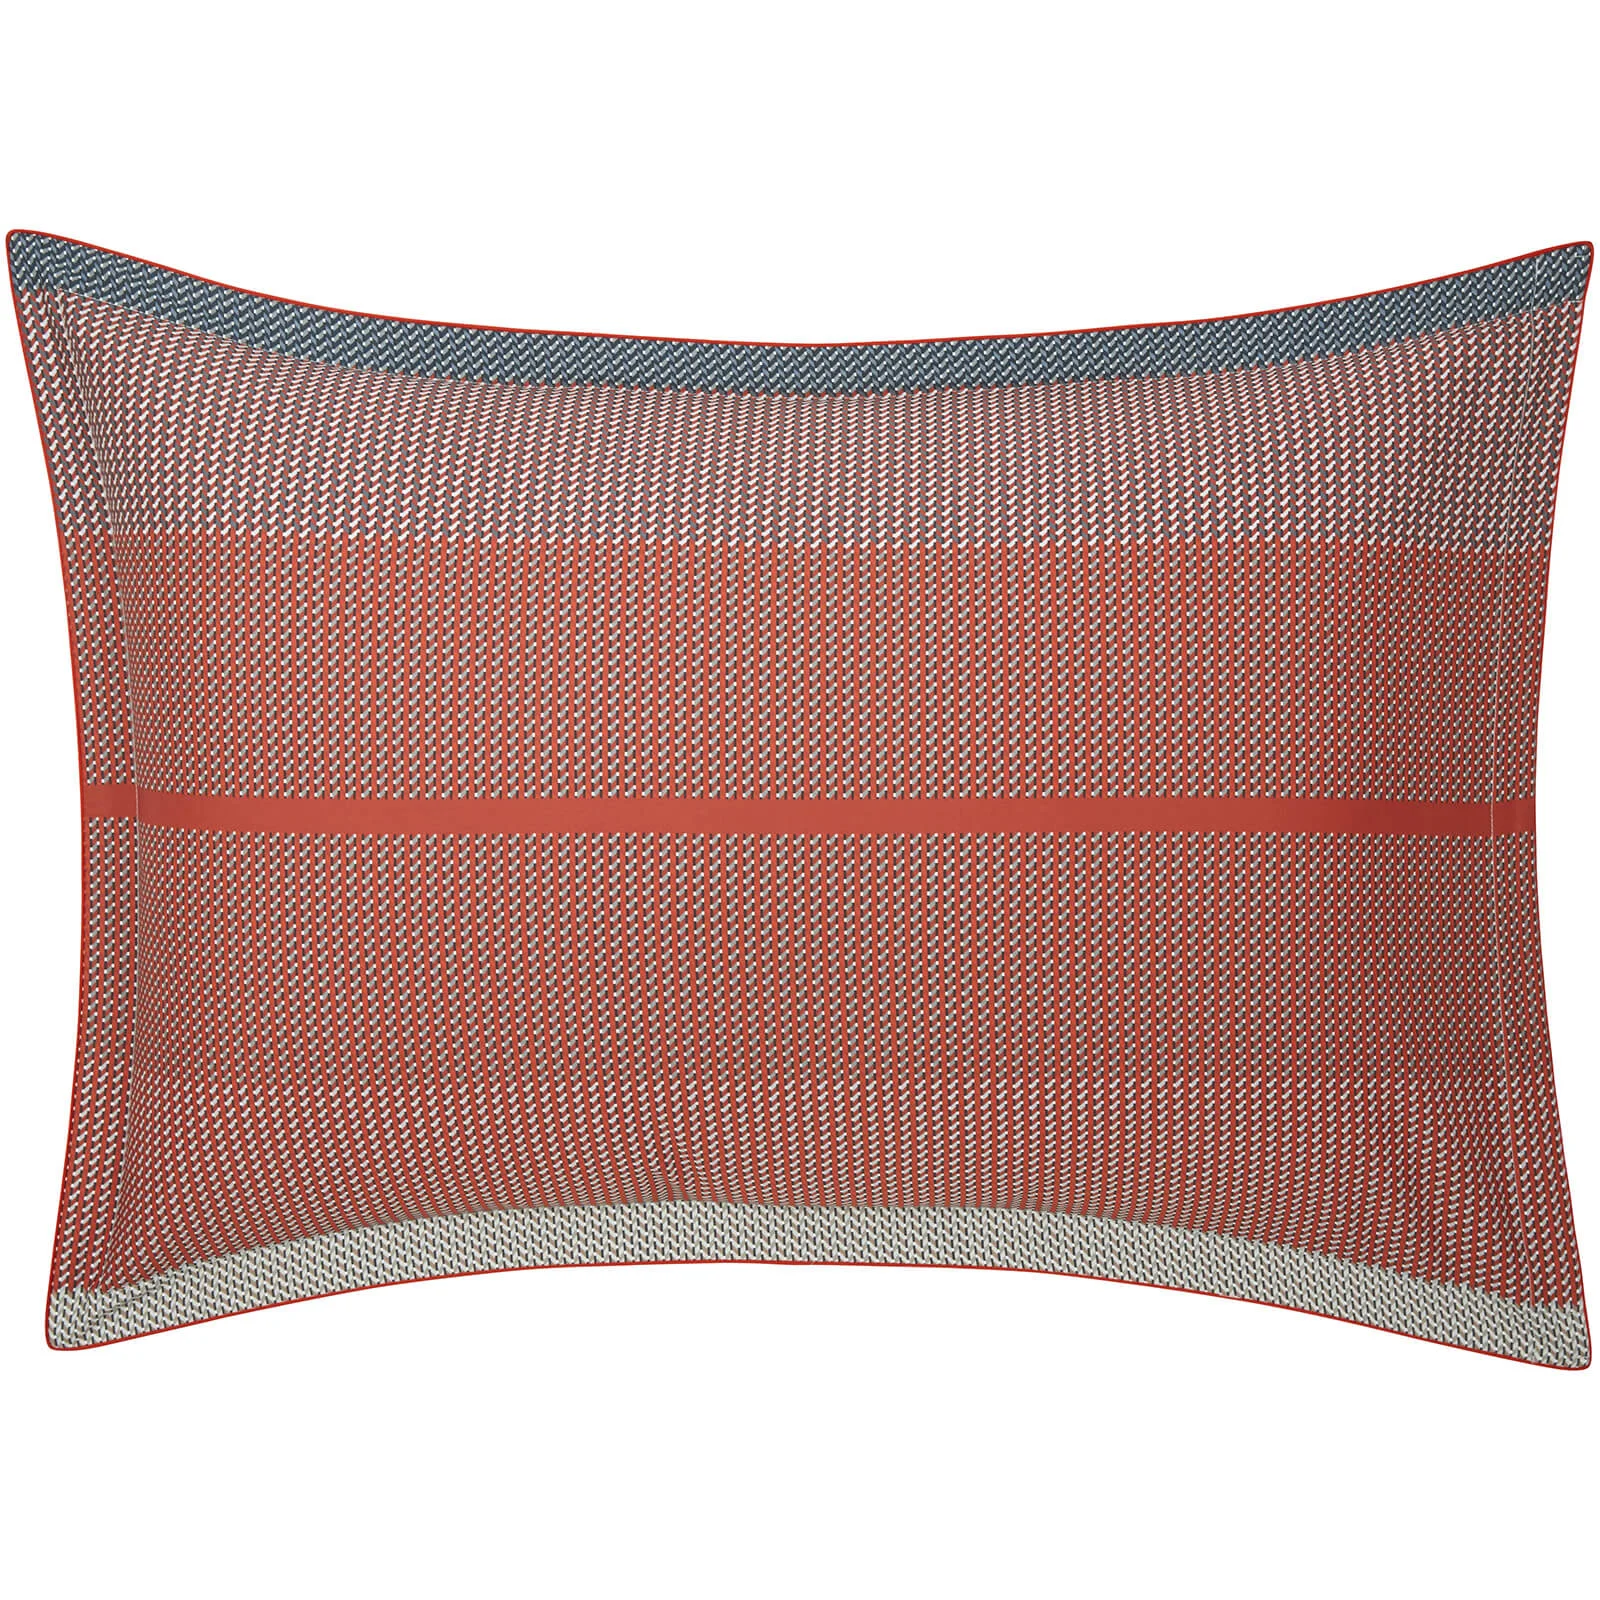 Hugo BOSS Aran Poppy Standard Pillowcase Image 1